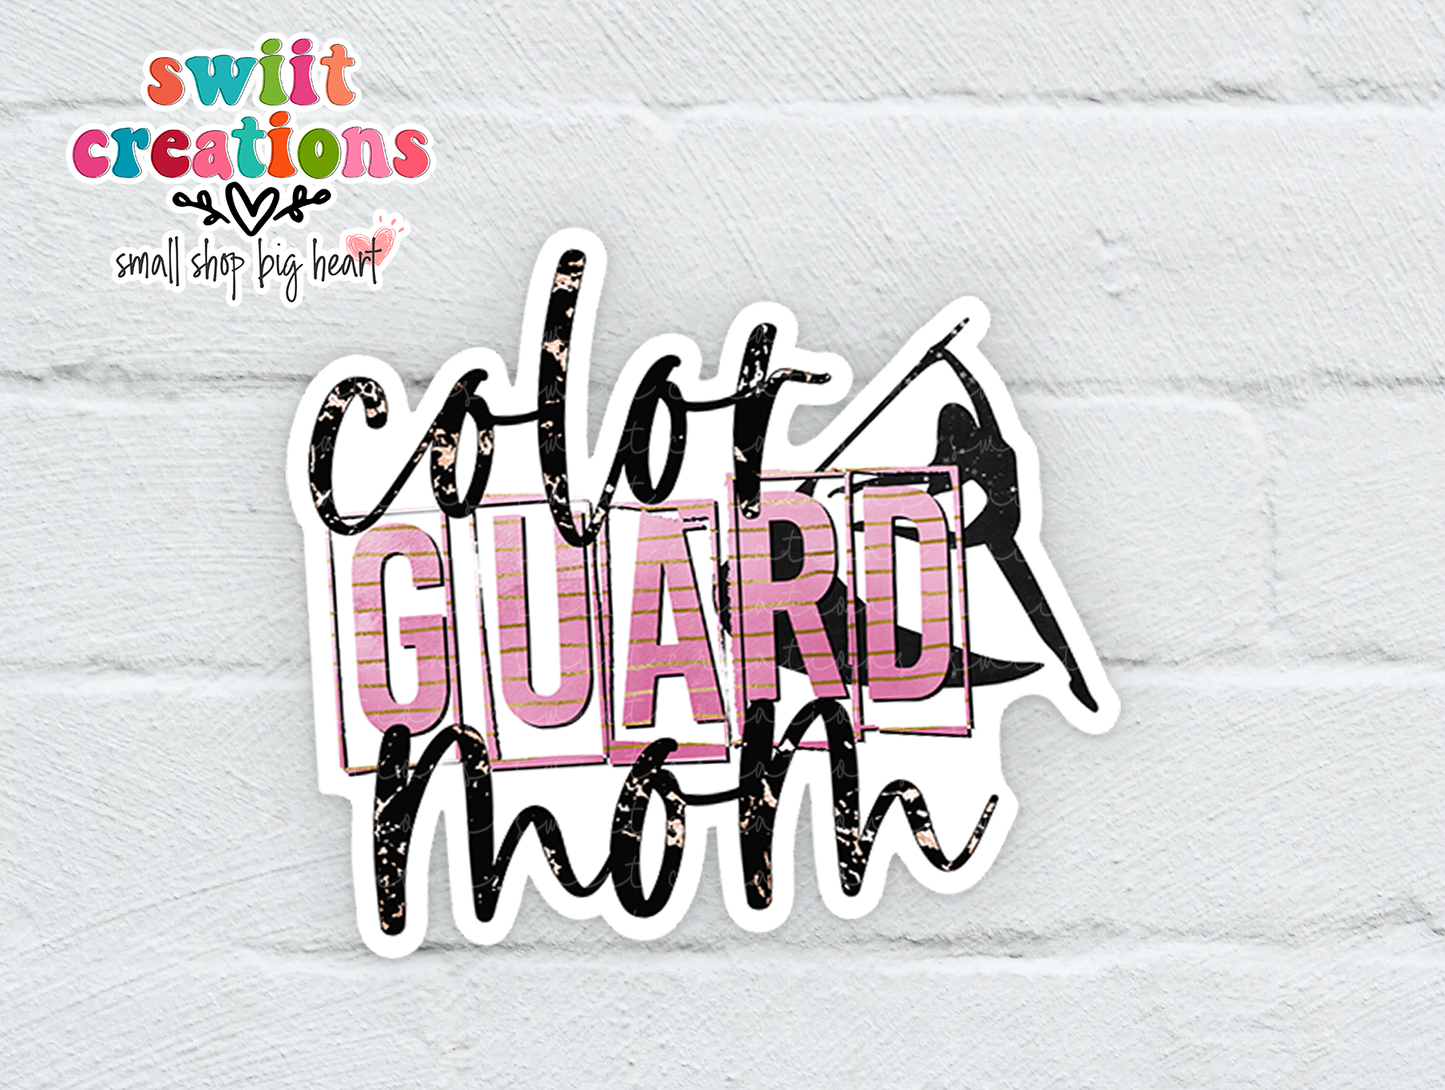 Color Guard Mom Waterproof Sticker   (SS232) | SCD169